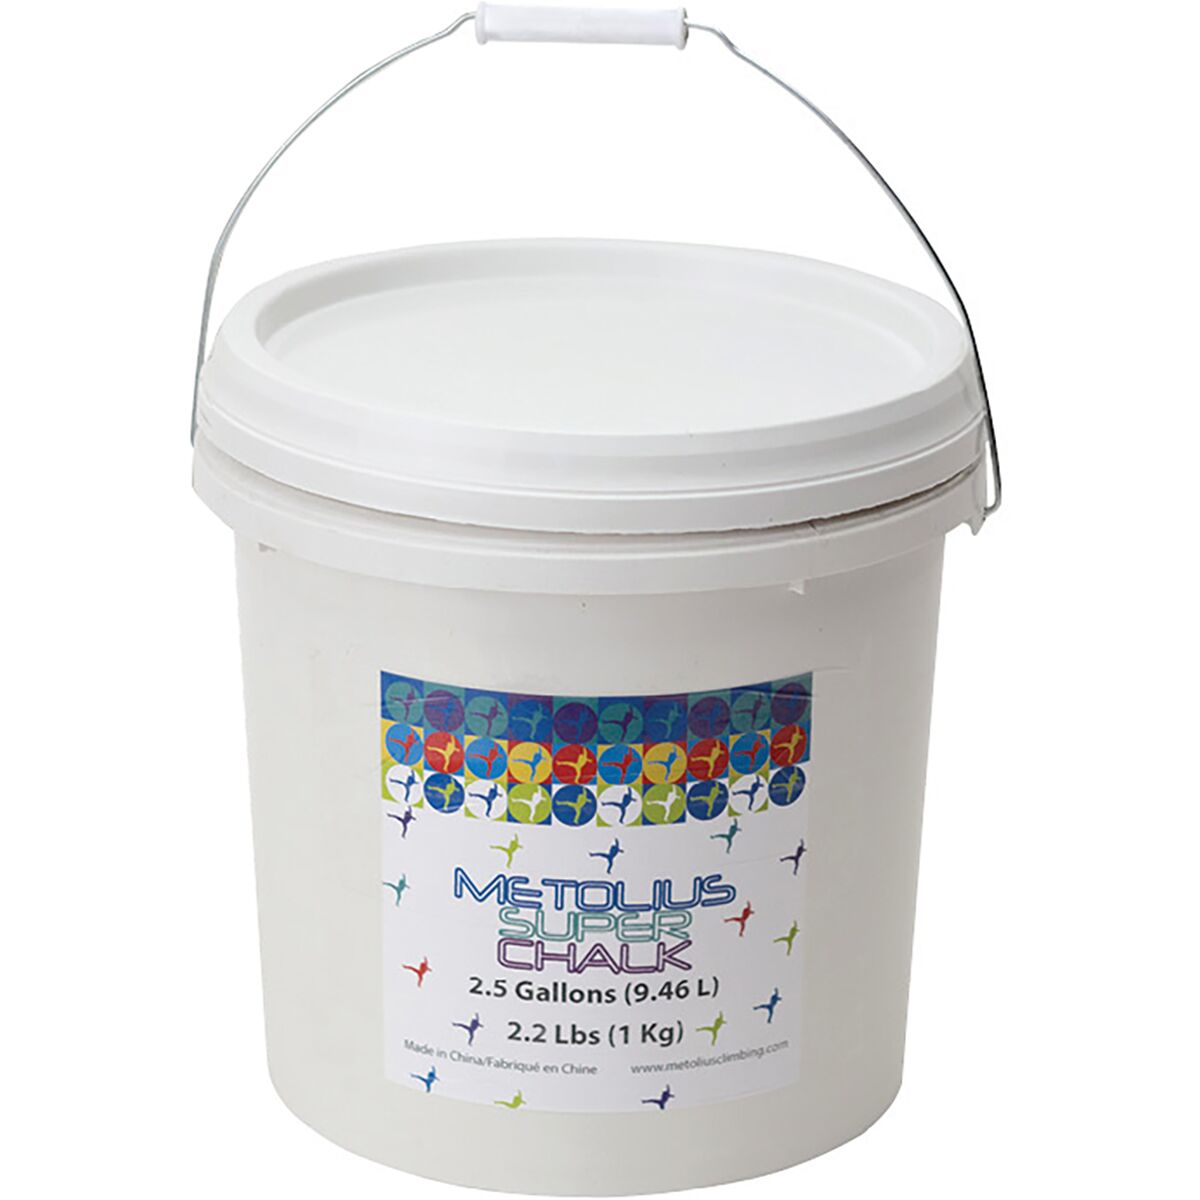 Metolius Super Chalk 2.5 Gallon Bucket